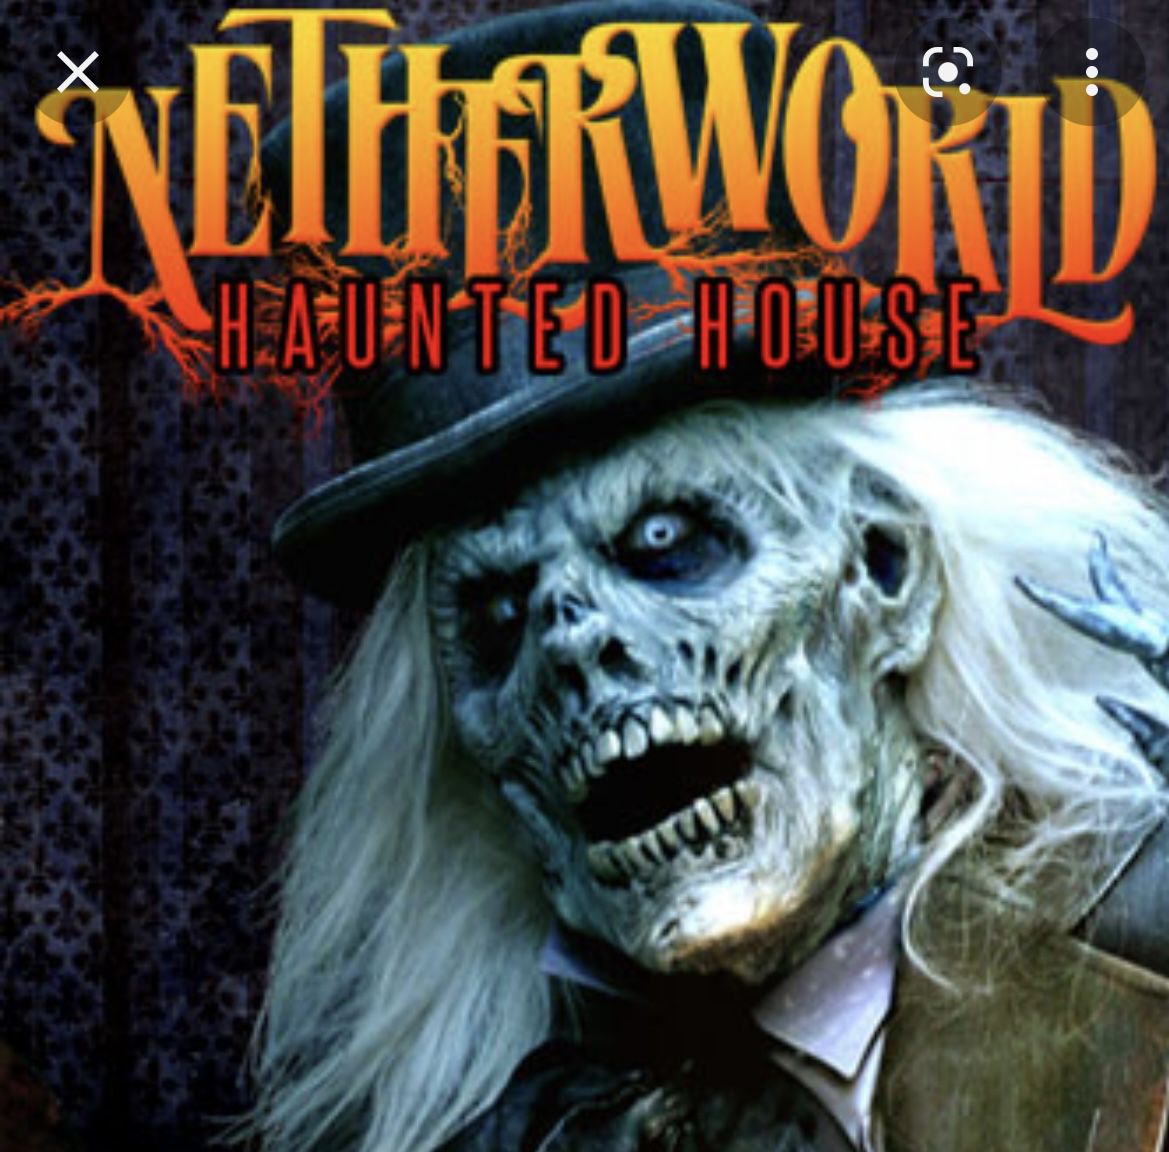 Netherworld Haunted House Tickets 